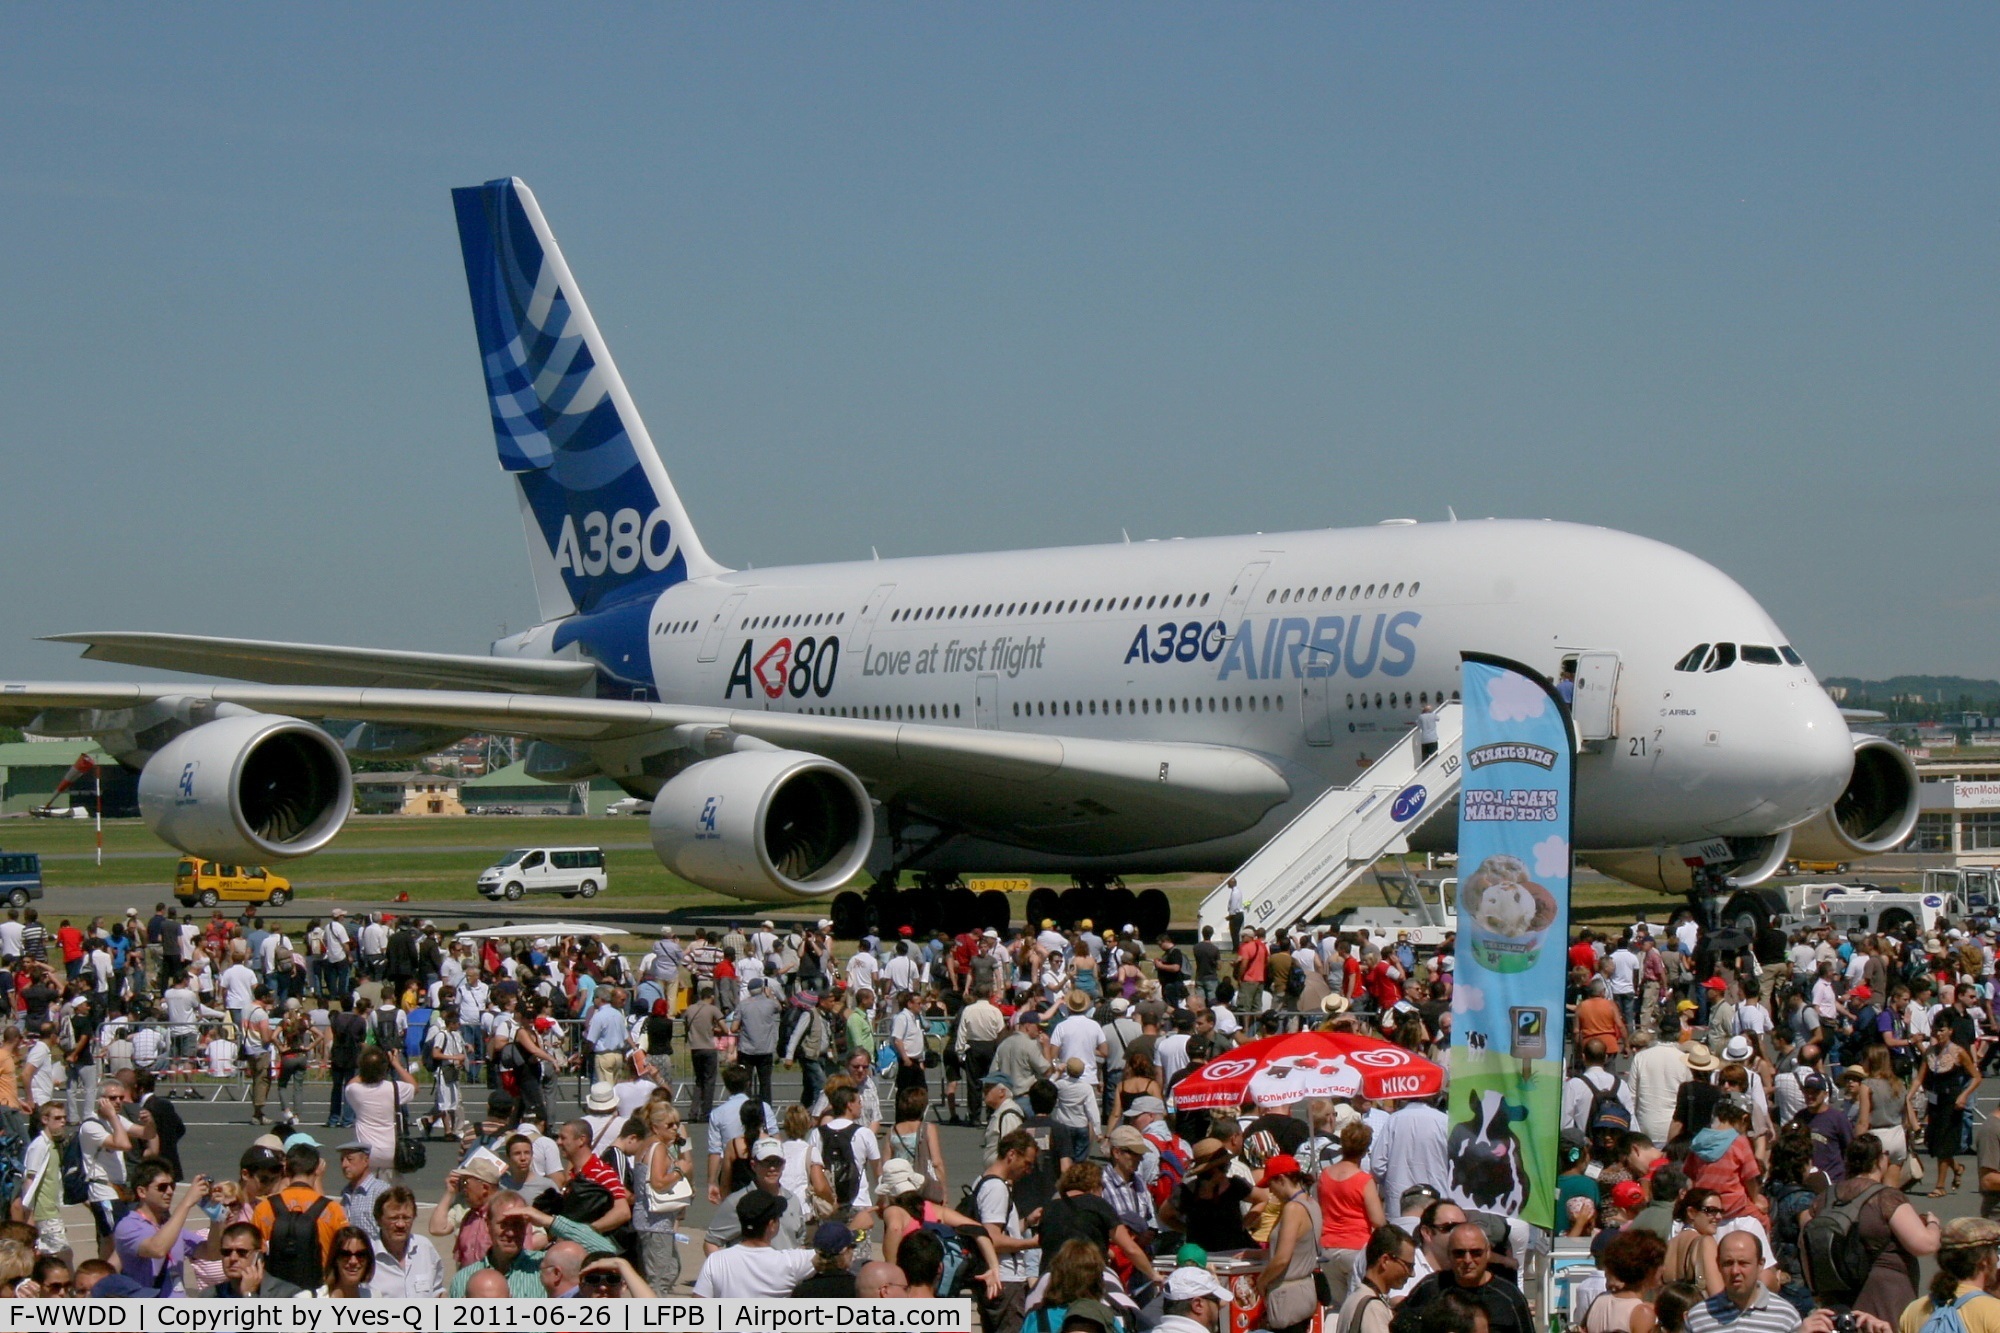 F-WWDD, 2005 Airbus A380-861 C/N 004, Airbus A380-861, Static display, Paris Le Bourget (LFPB-LBG) Air Show in june 2011